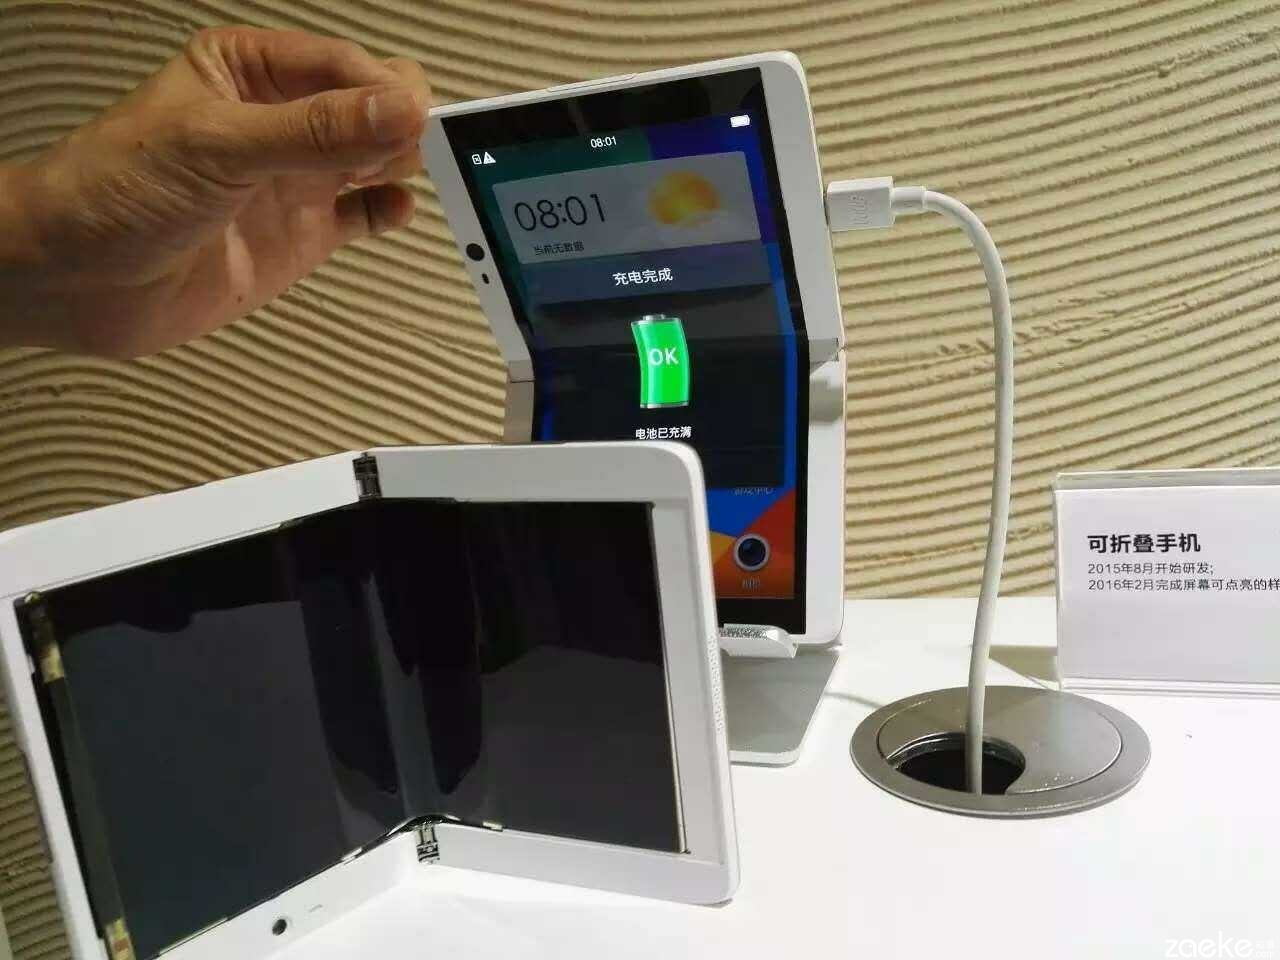 Oppo's folding smartphone prototype smiles for the camera